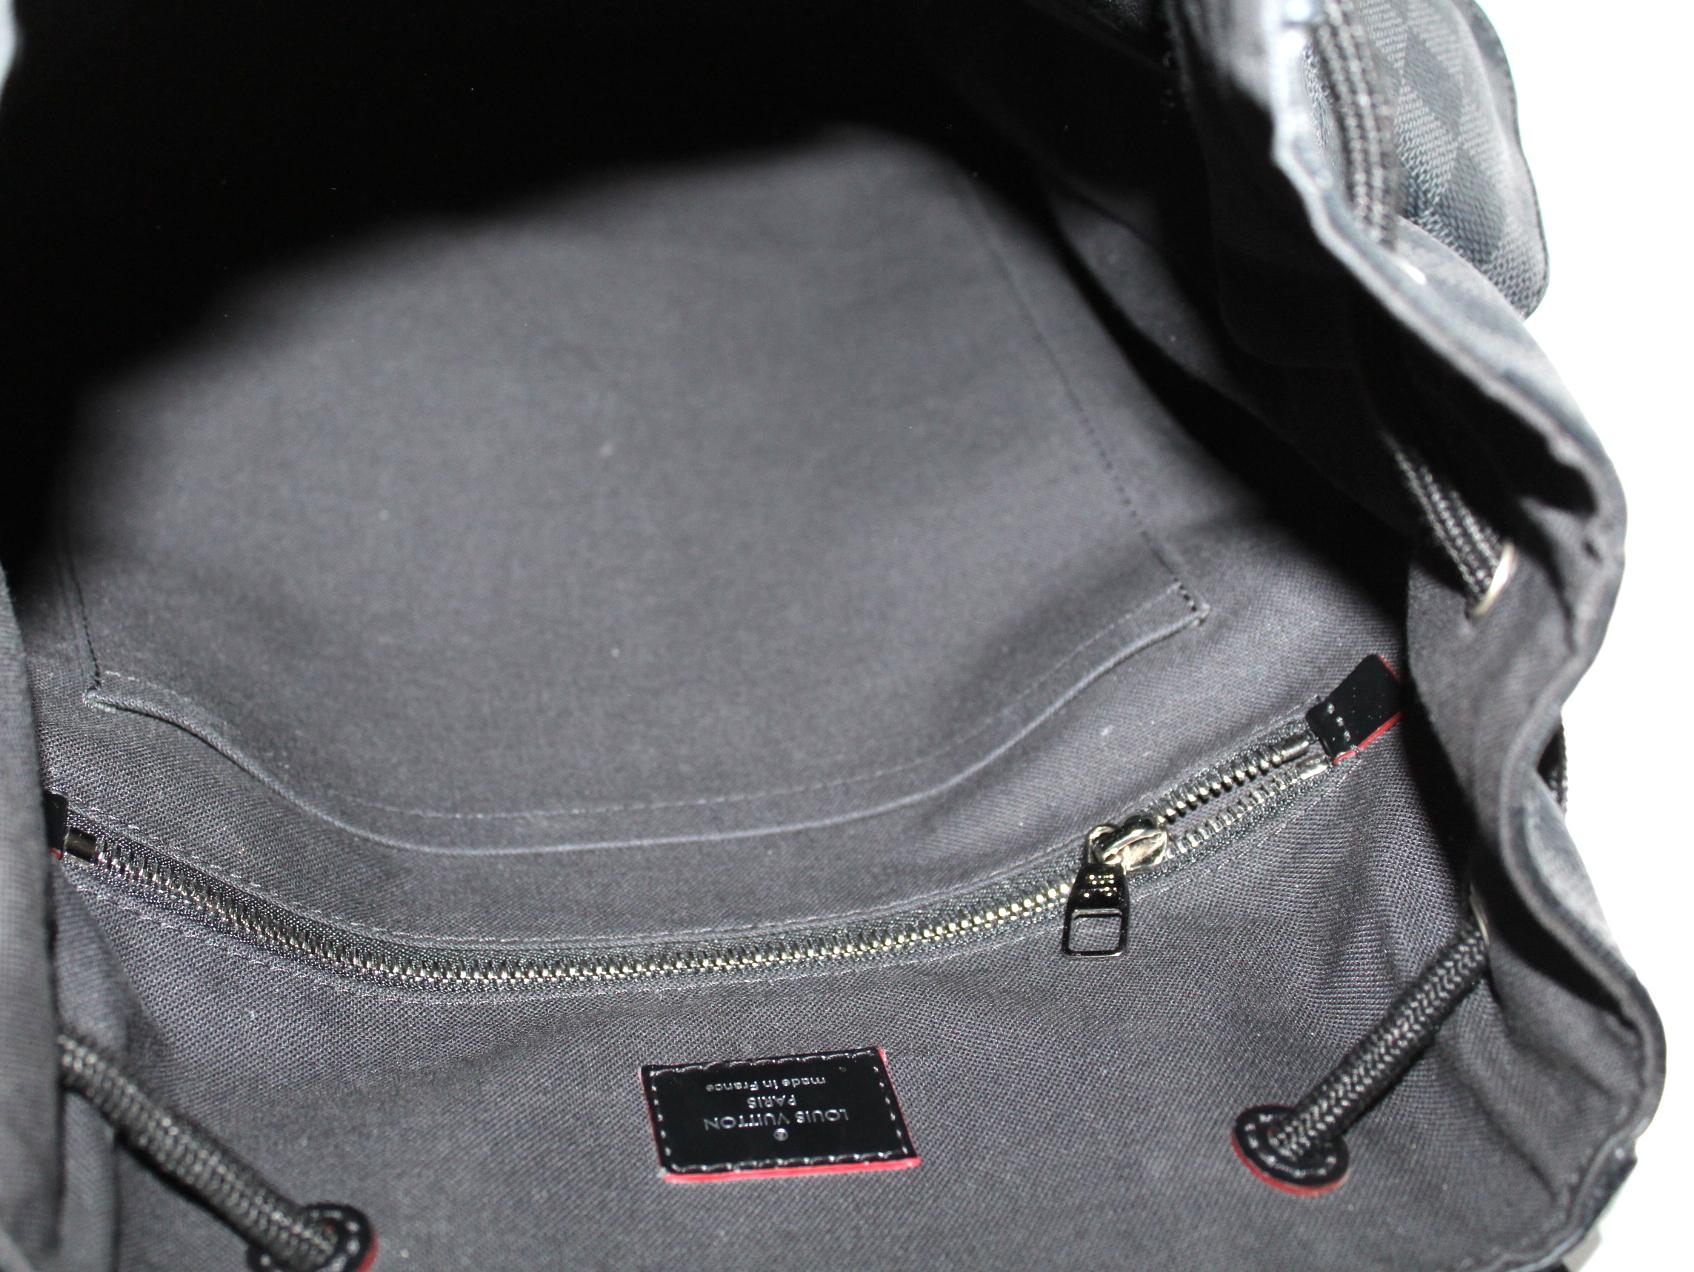 Women's 2015 Luois Vuitton Damier Graphite Christopher Backpack Bag